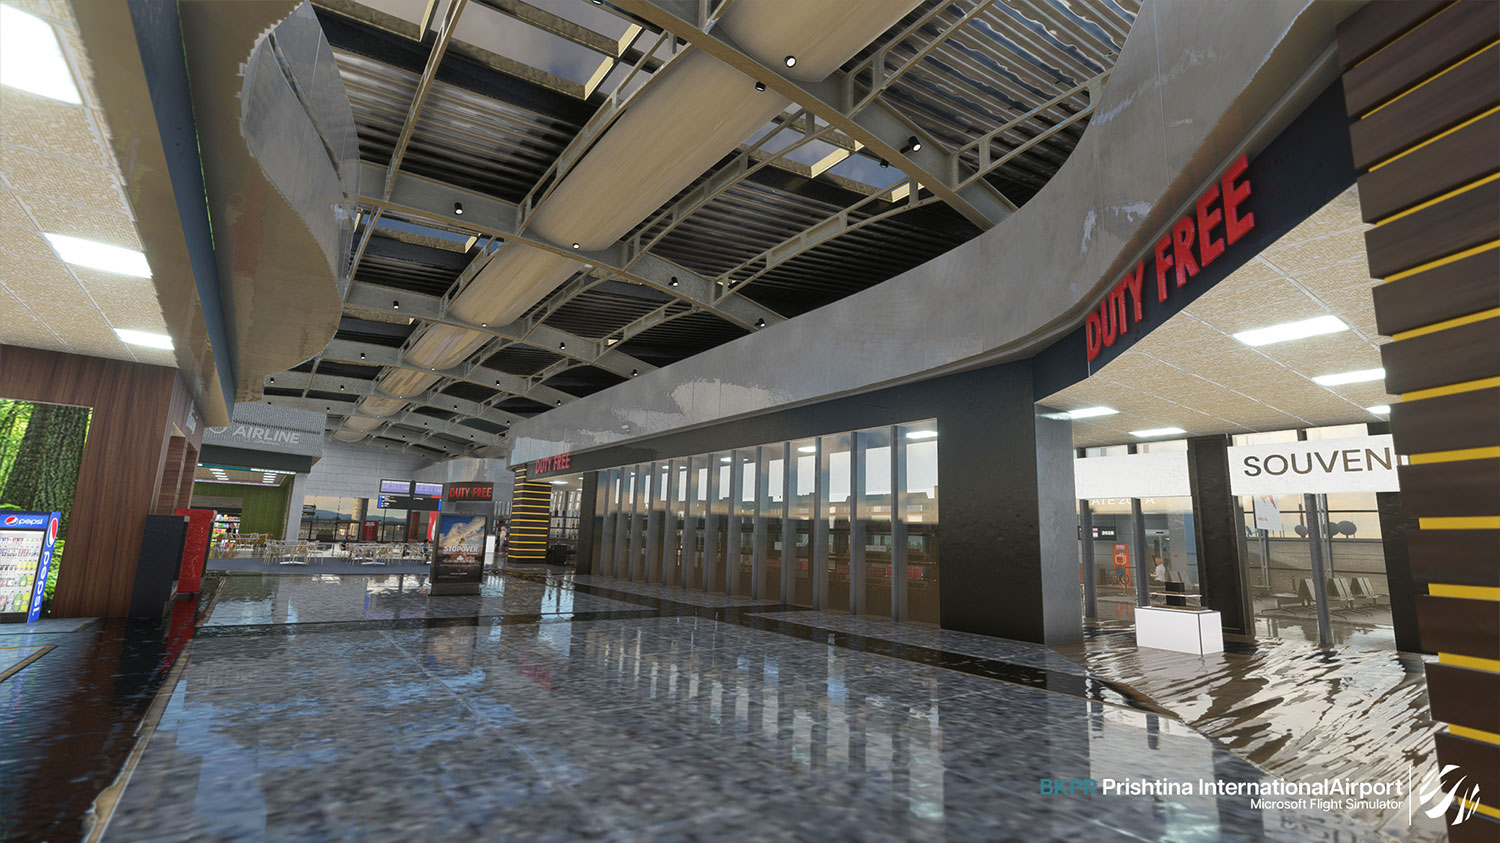 M'M Simulations - BKPR - Prishtina International Airport MSFS